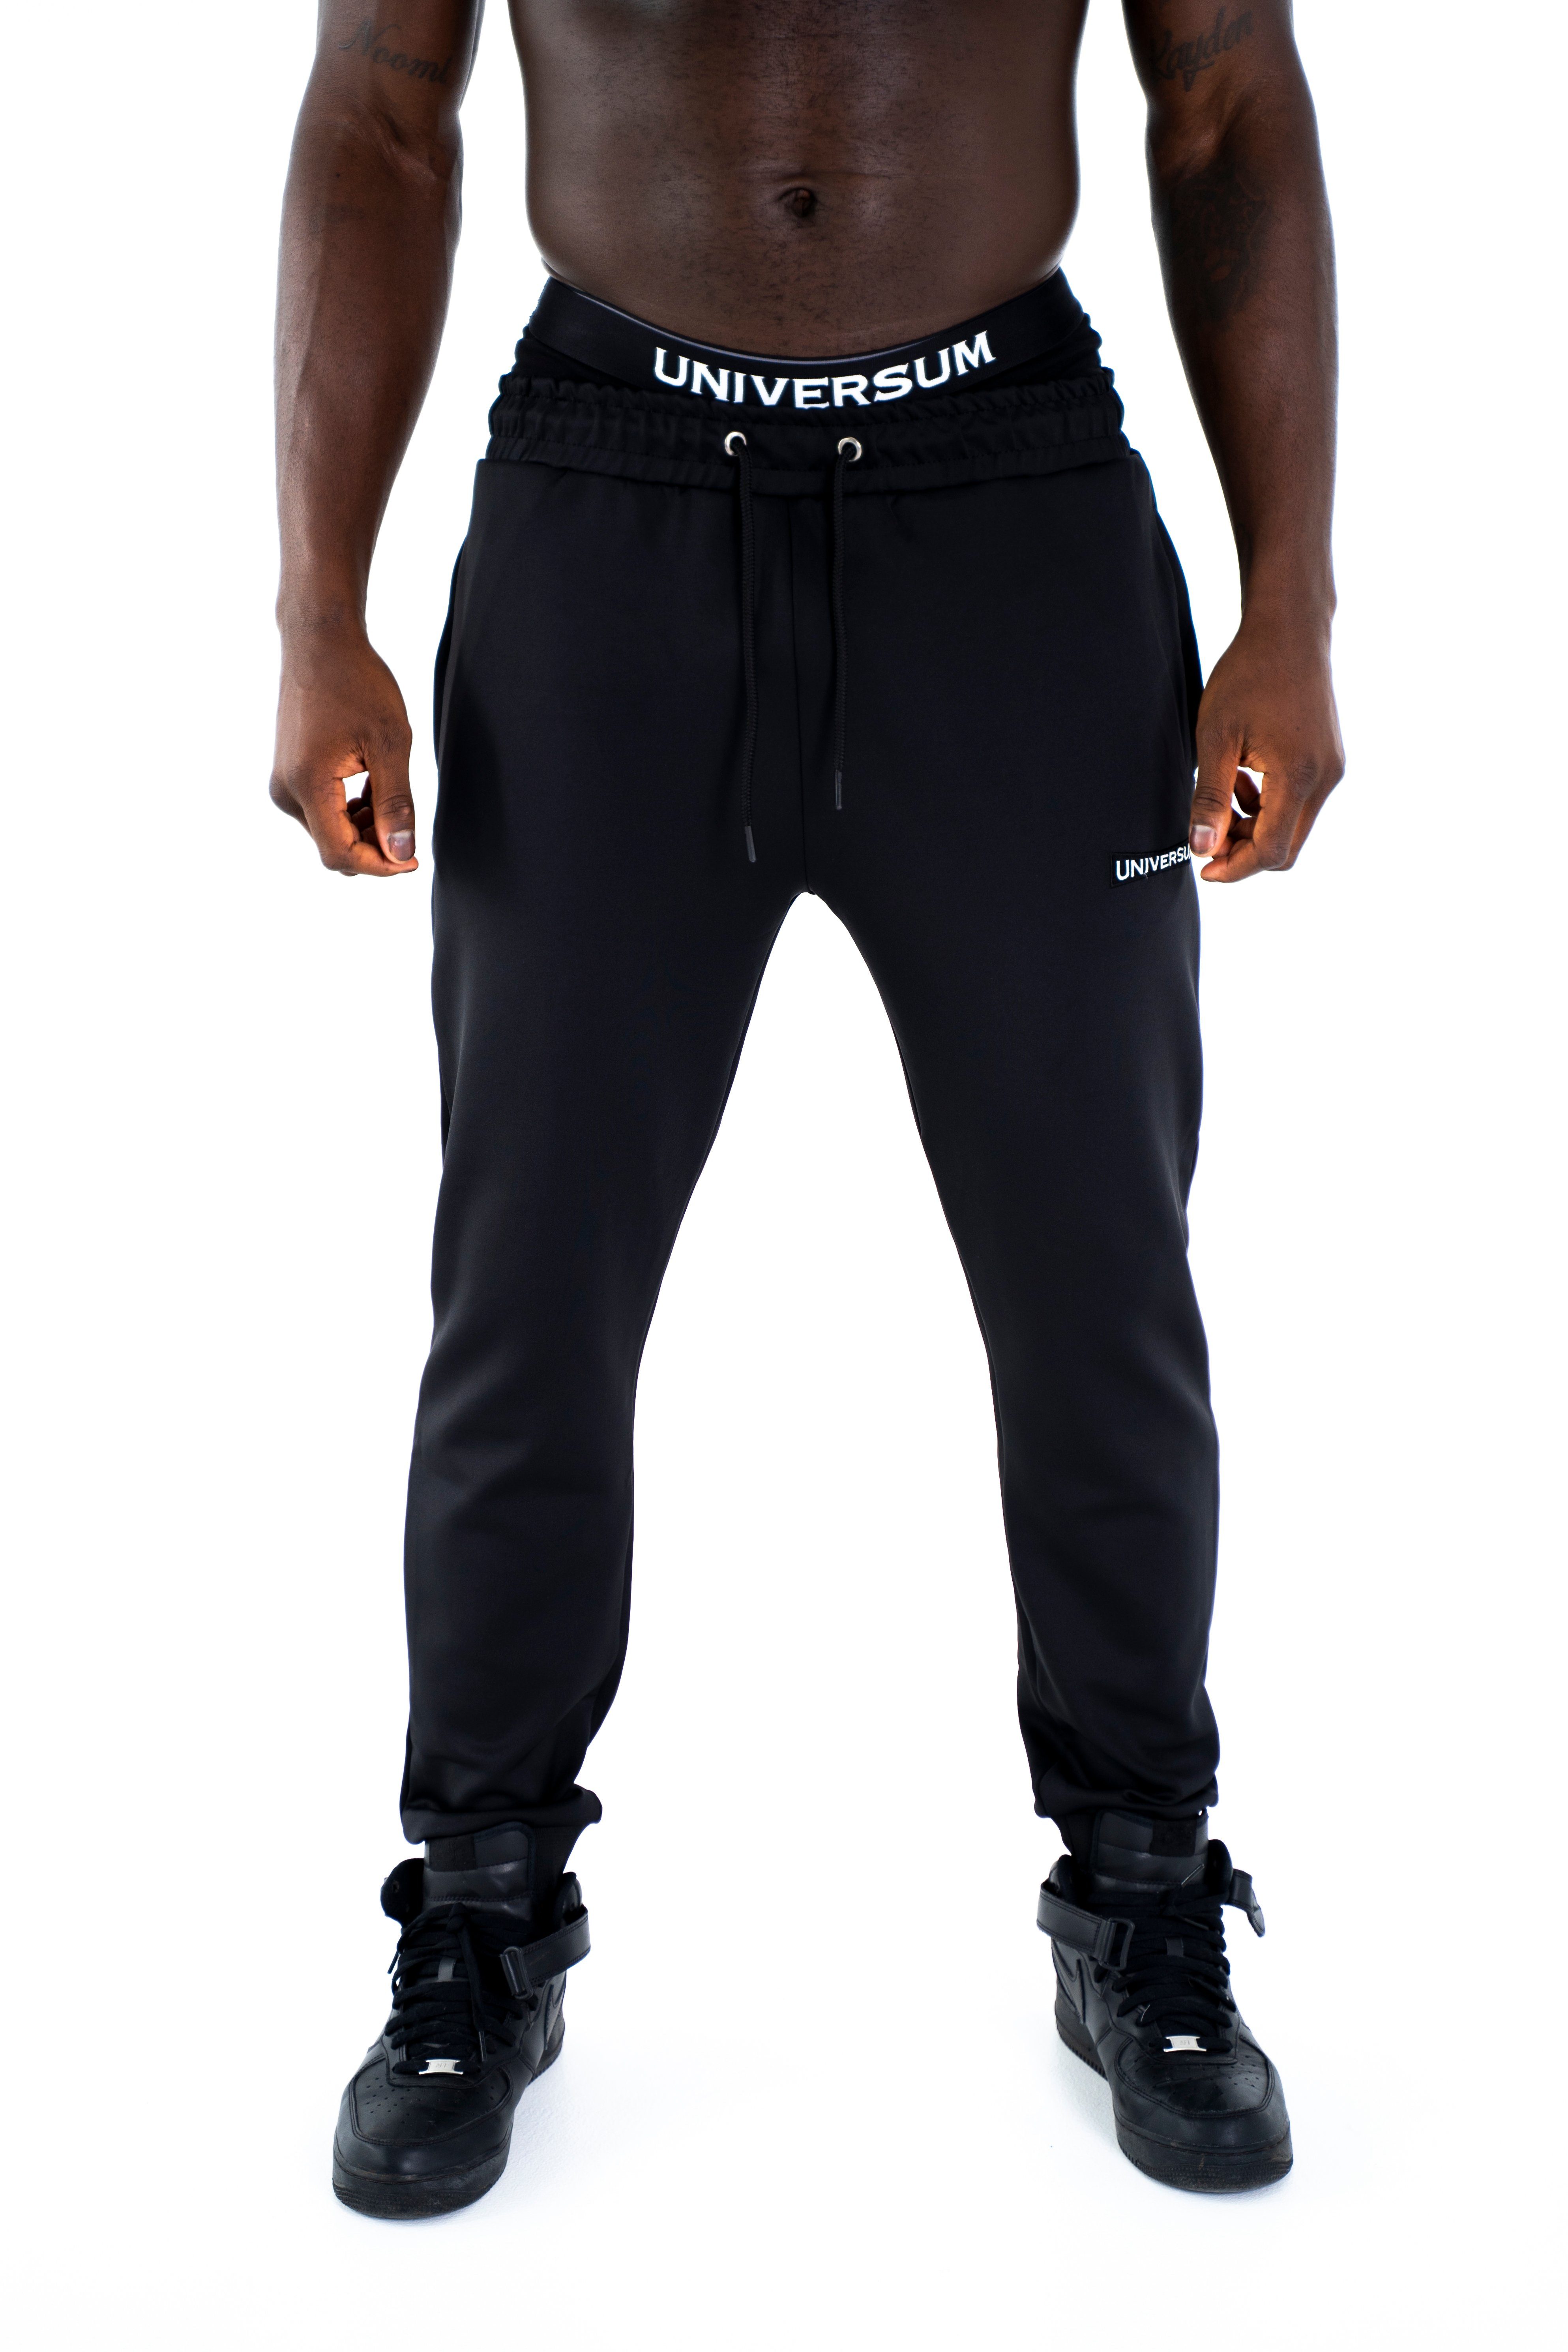 Universum Sportwear Jogginghose Modern Fit Pants Jogginghose für Sport, Fitness und Freizeit schwarz